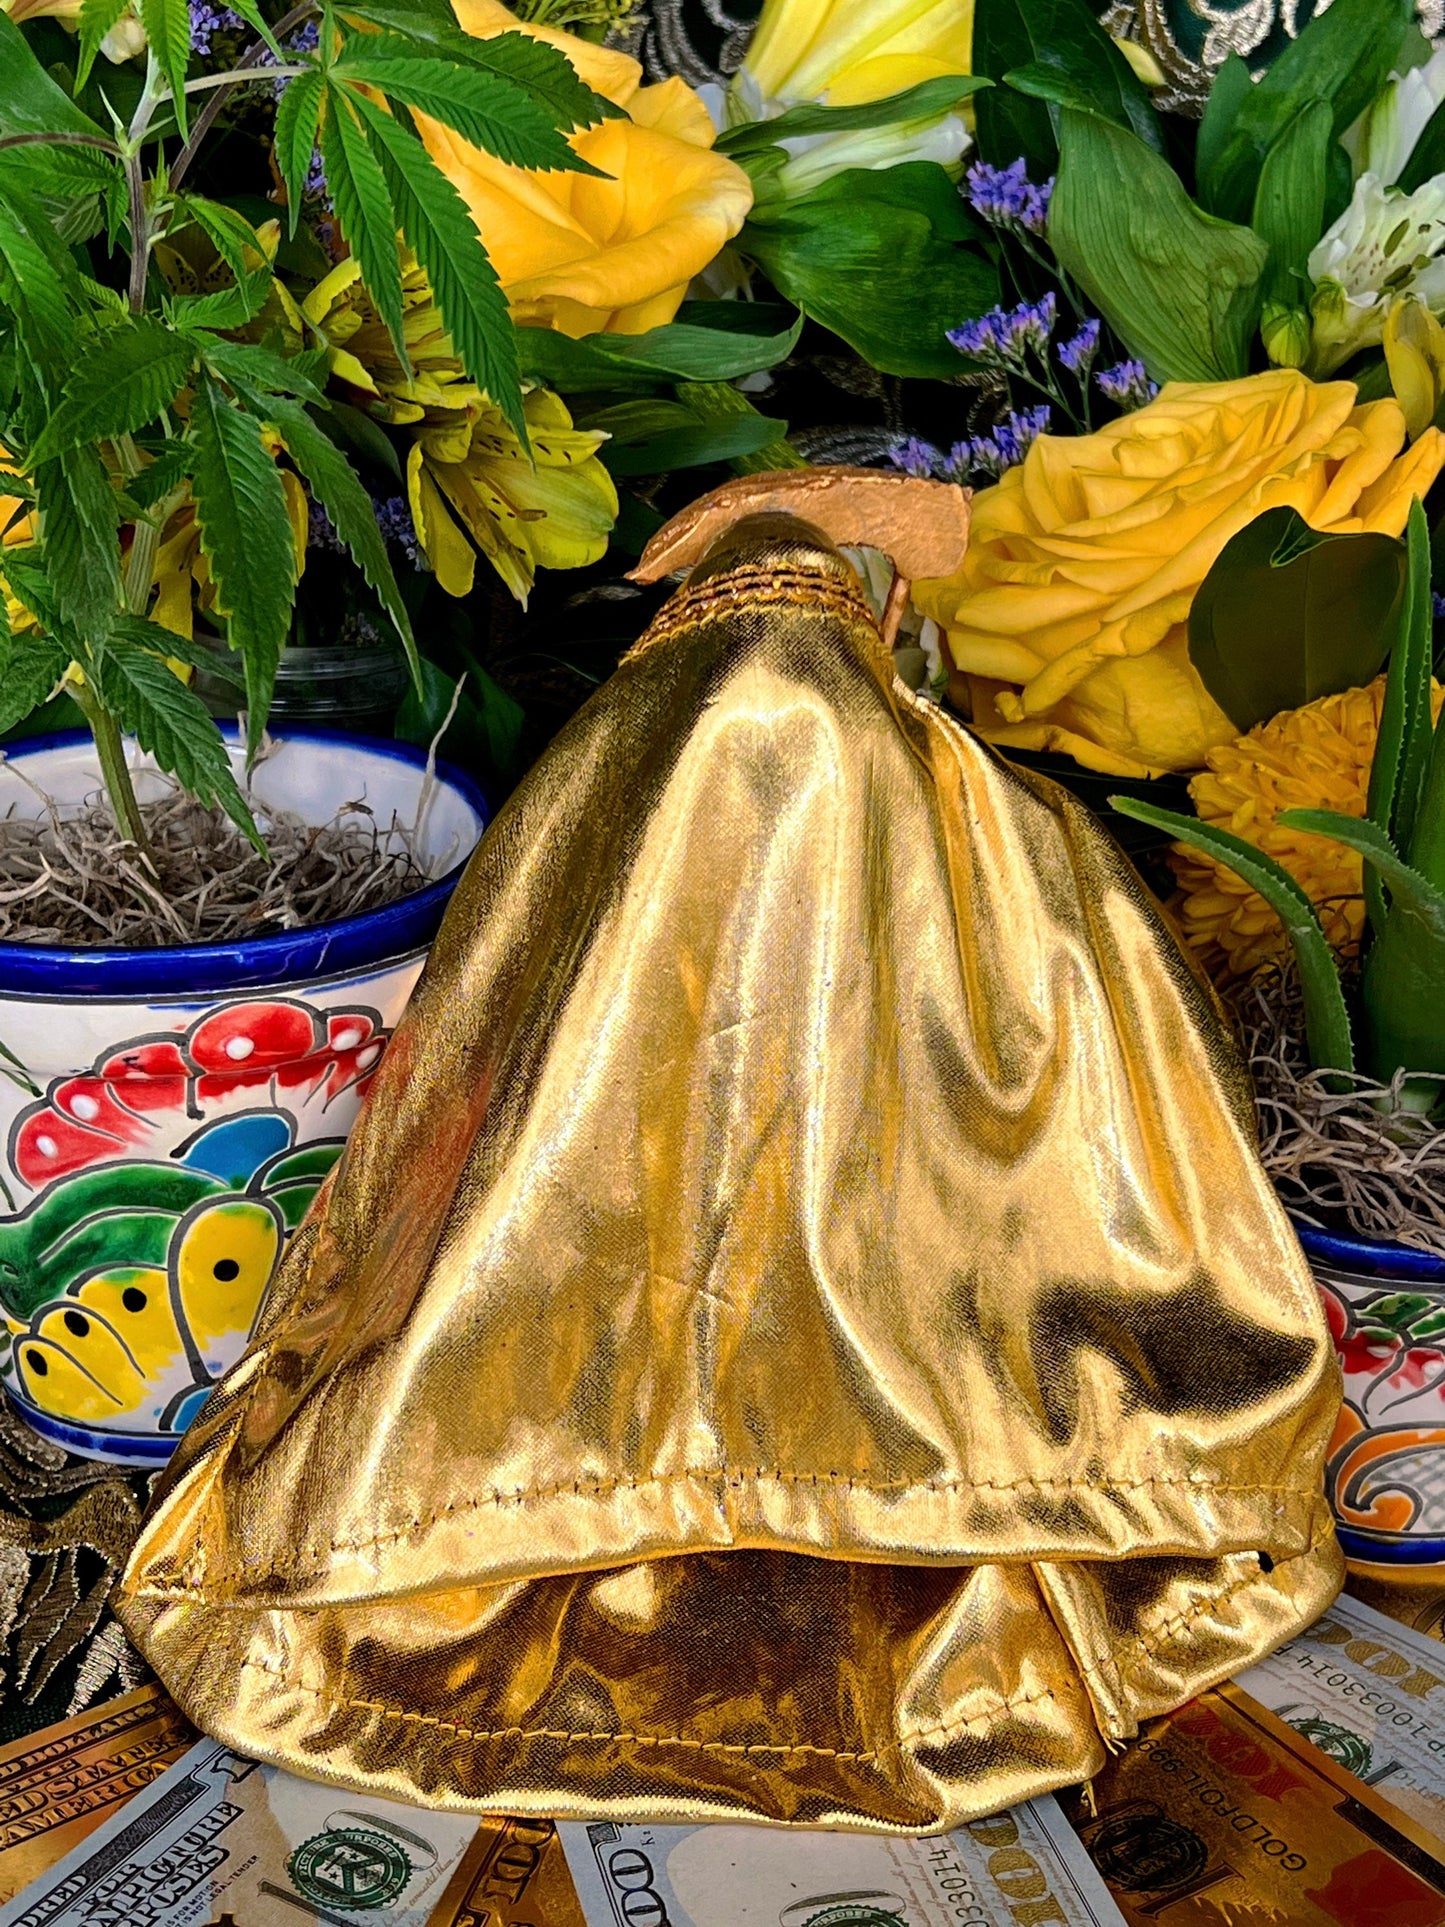 Santa Muerte Dorada Statue with Dress + 24K Gold + Baptized + Fixed + Made in Mexico